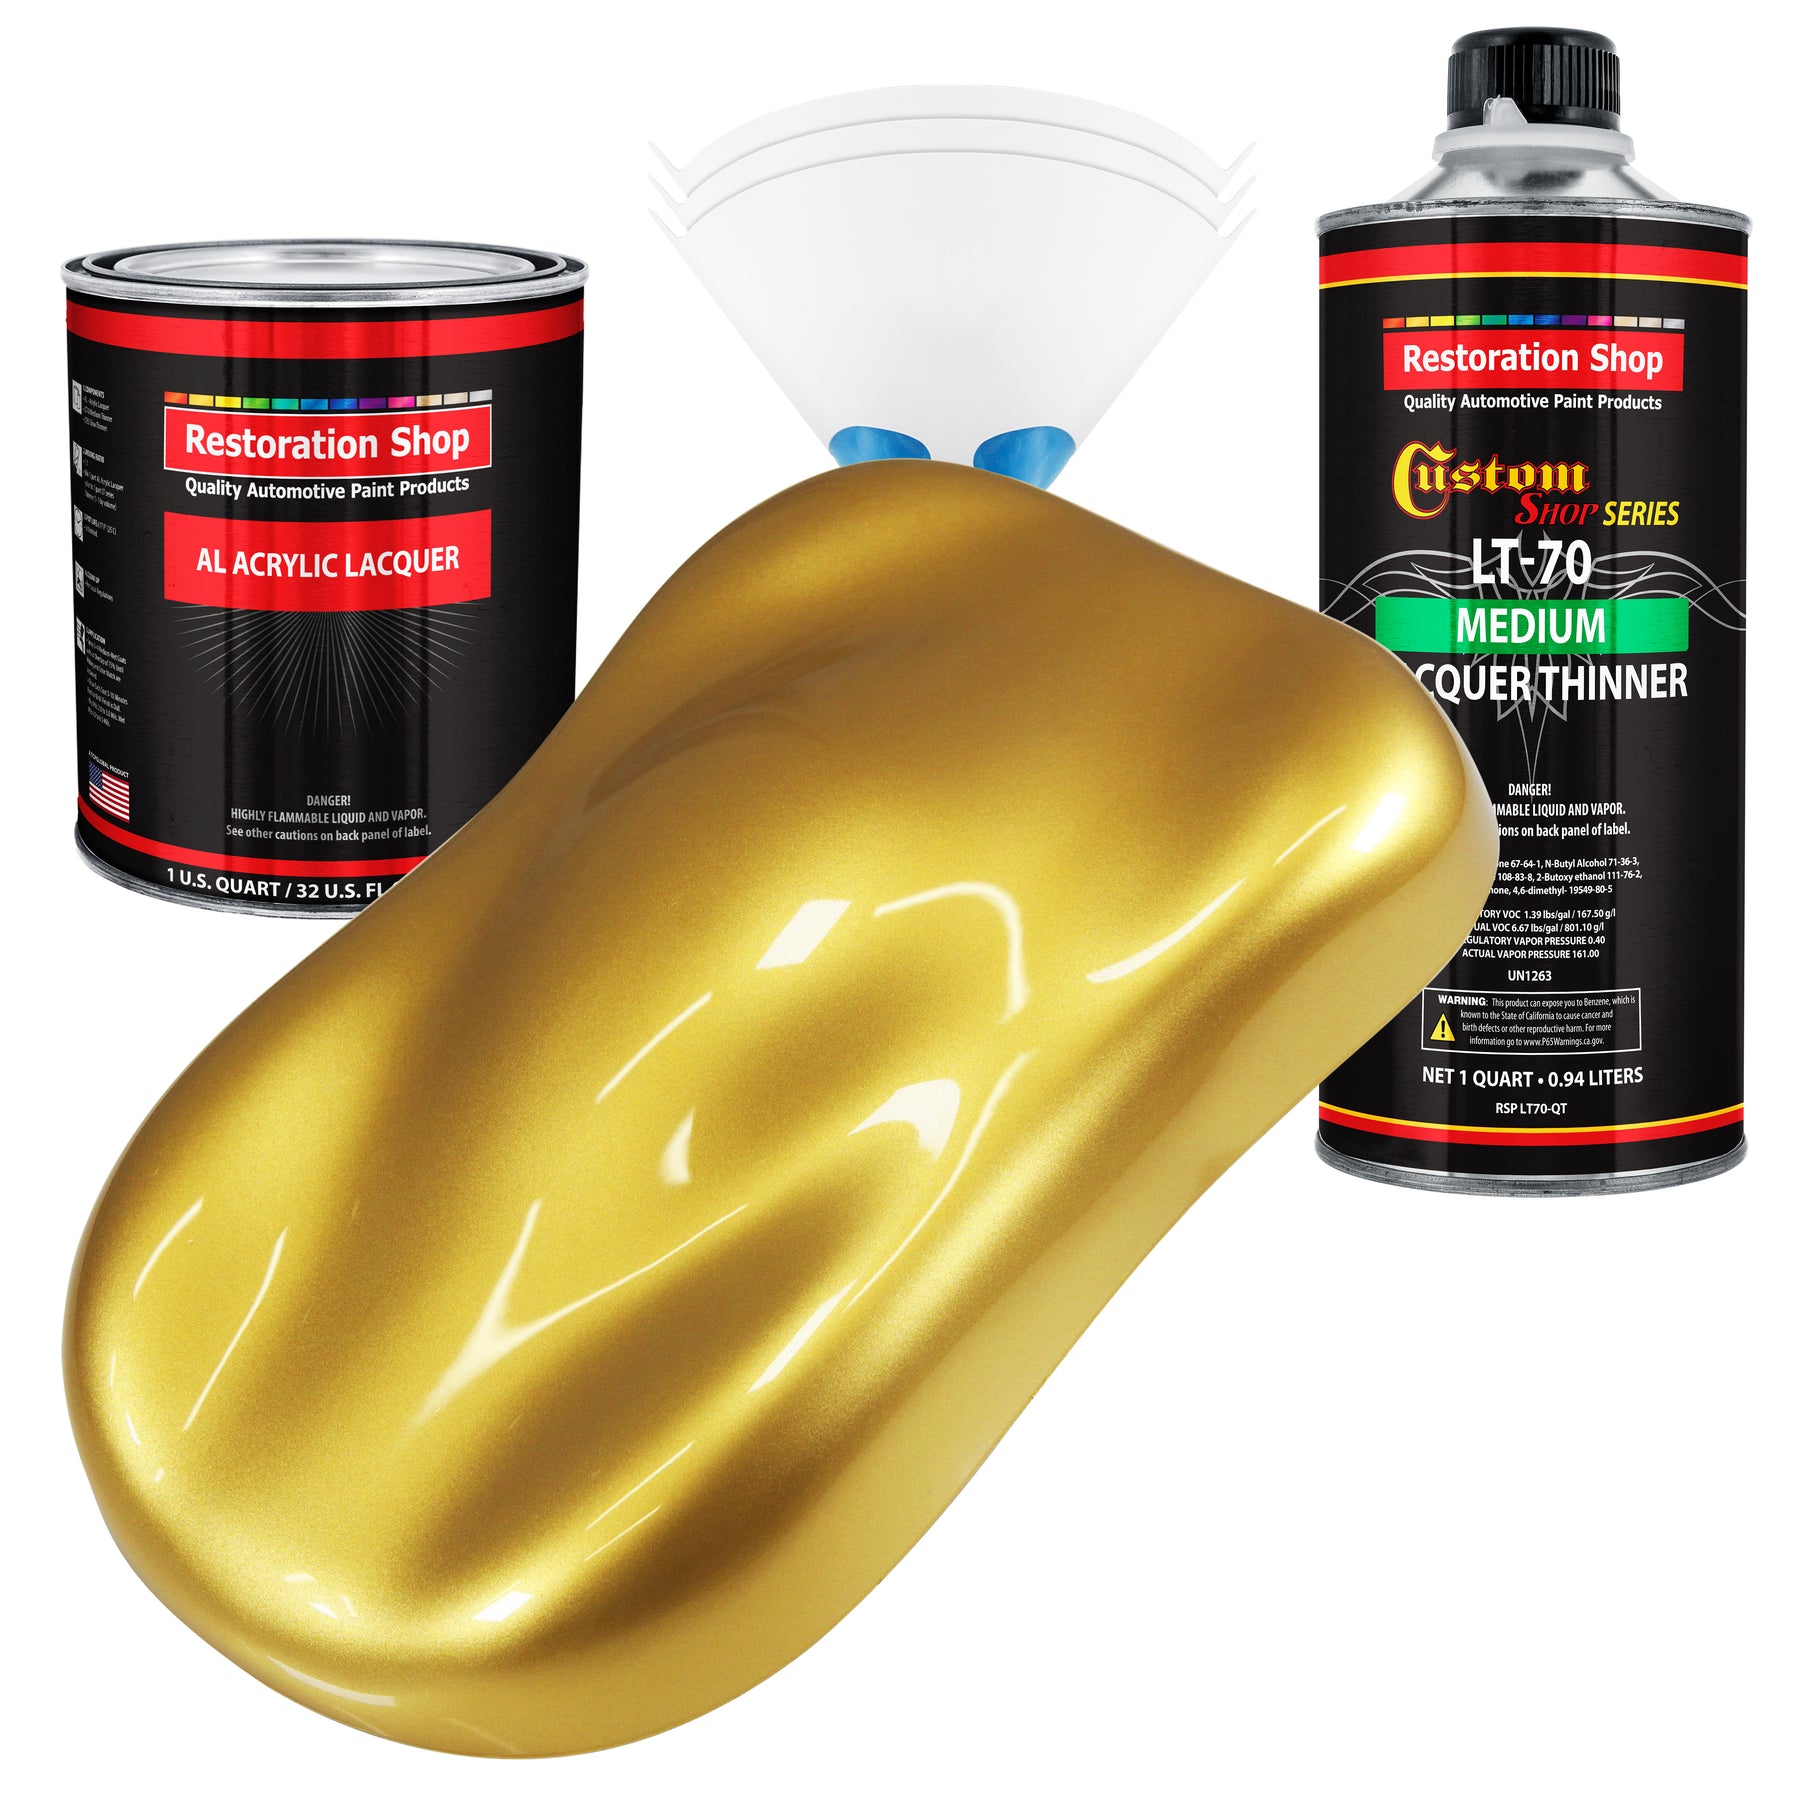 Anniversary Gold Metallic - Hot Rod Gloss Urethane Auto Car Paint, 1 Gallon